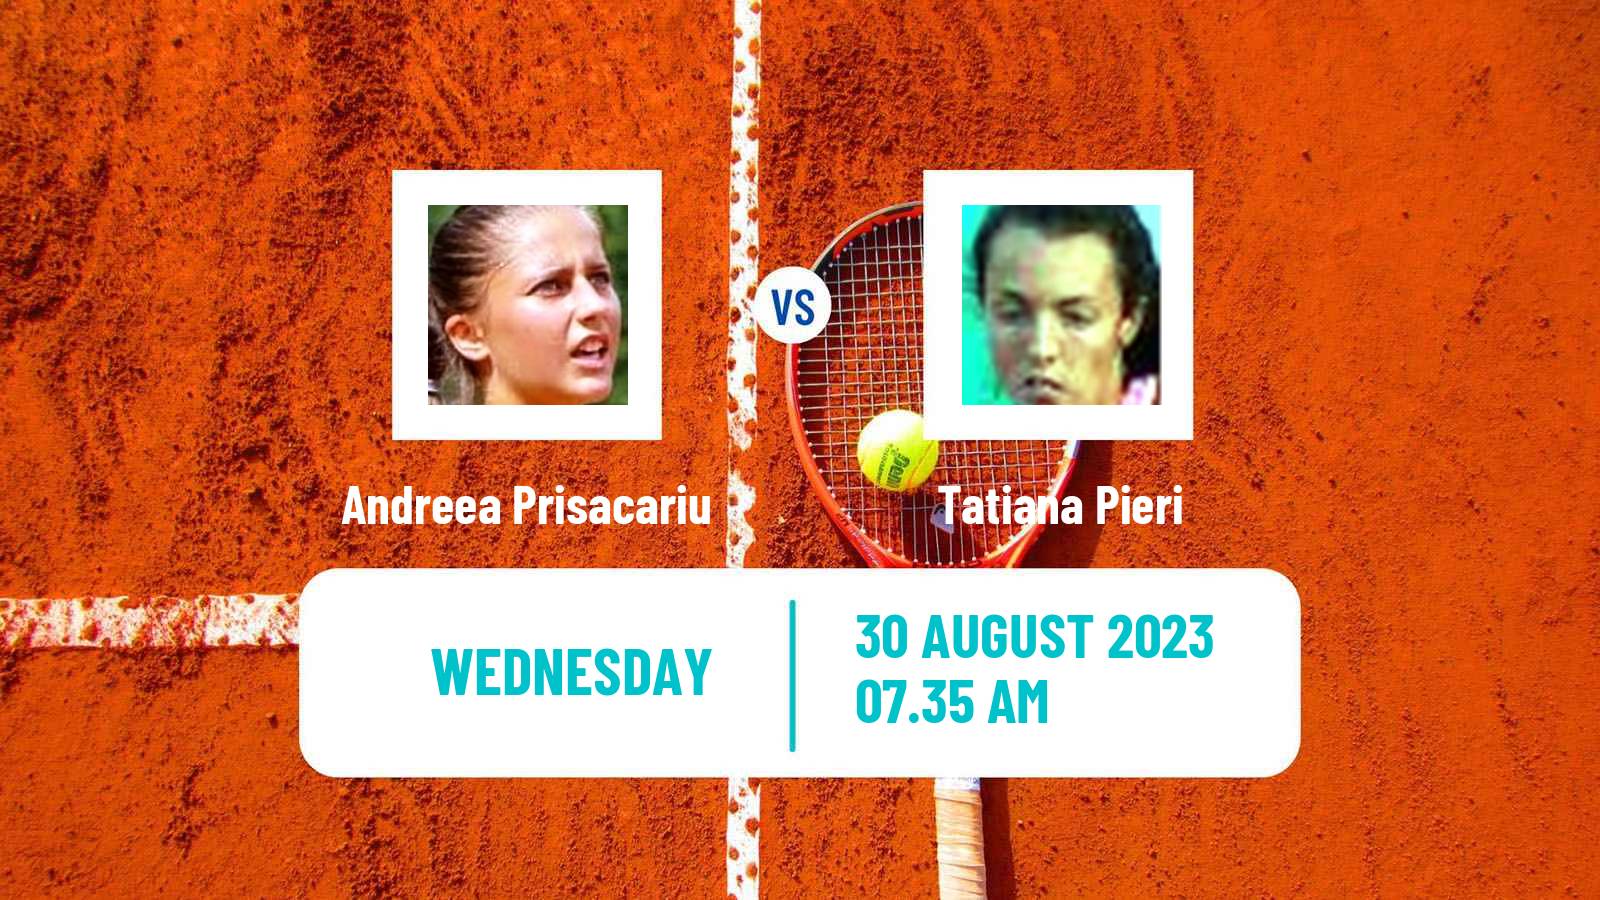 Tennis ITF W60 Prague 2 Women Andreea Prisacariu - Tatiana Pieri